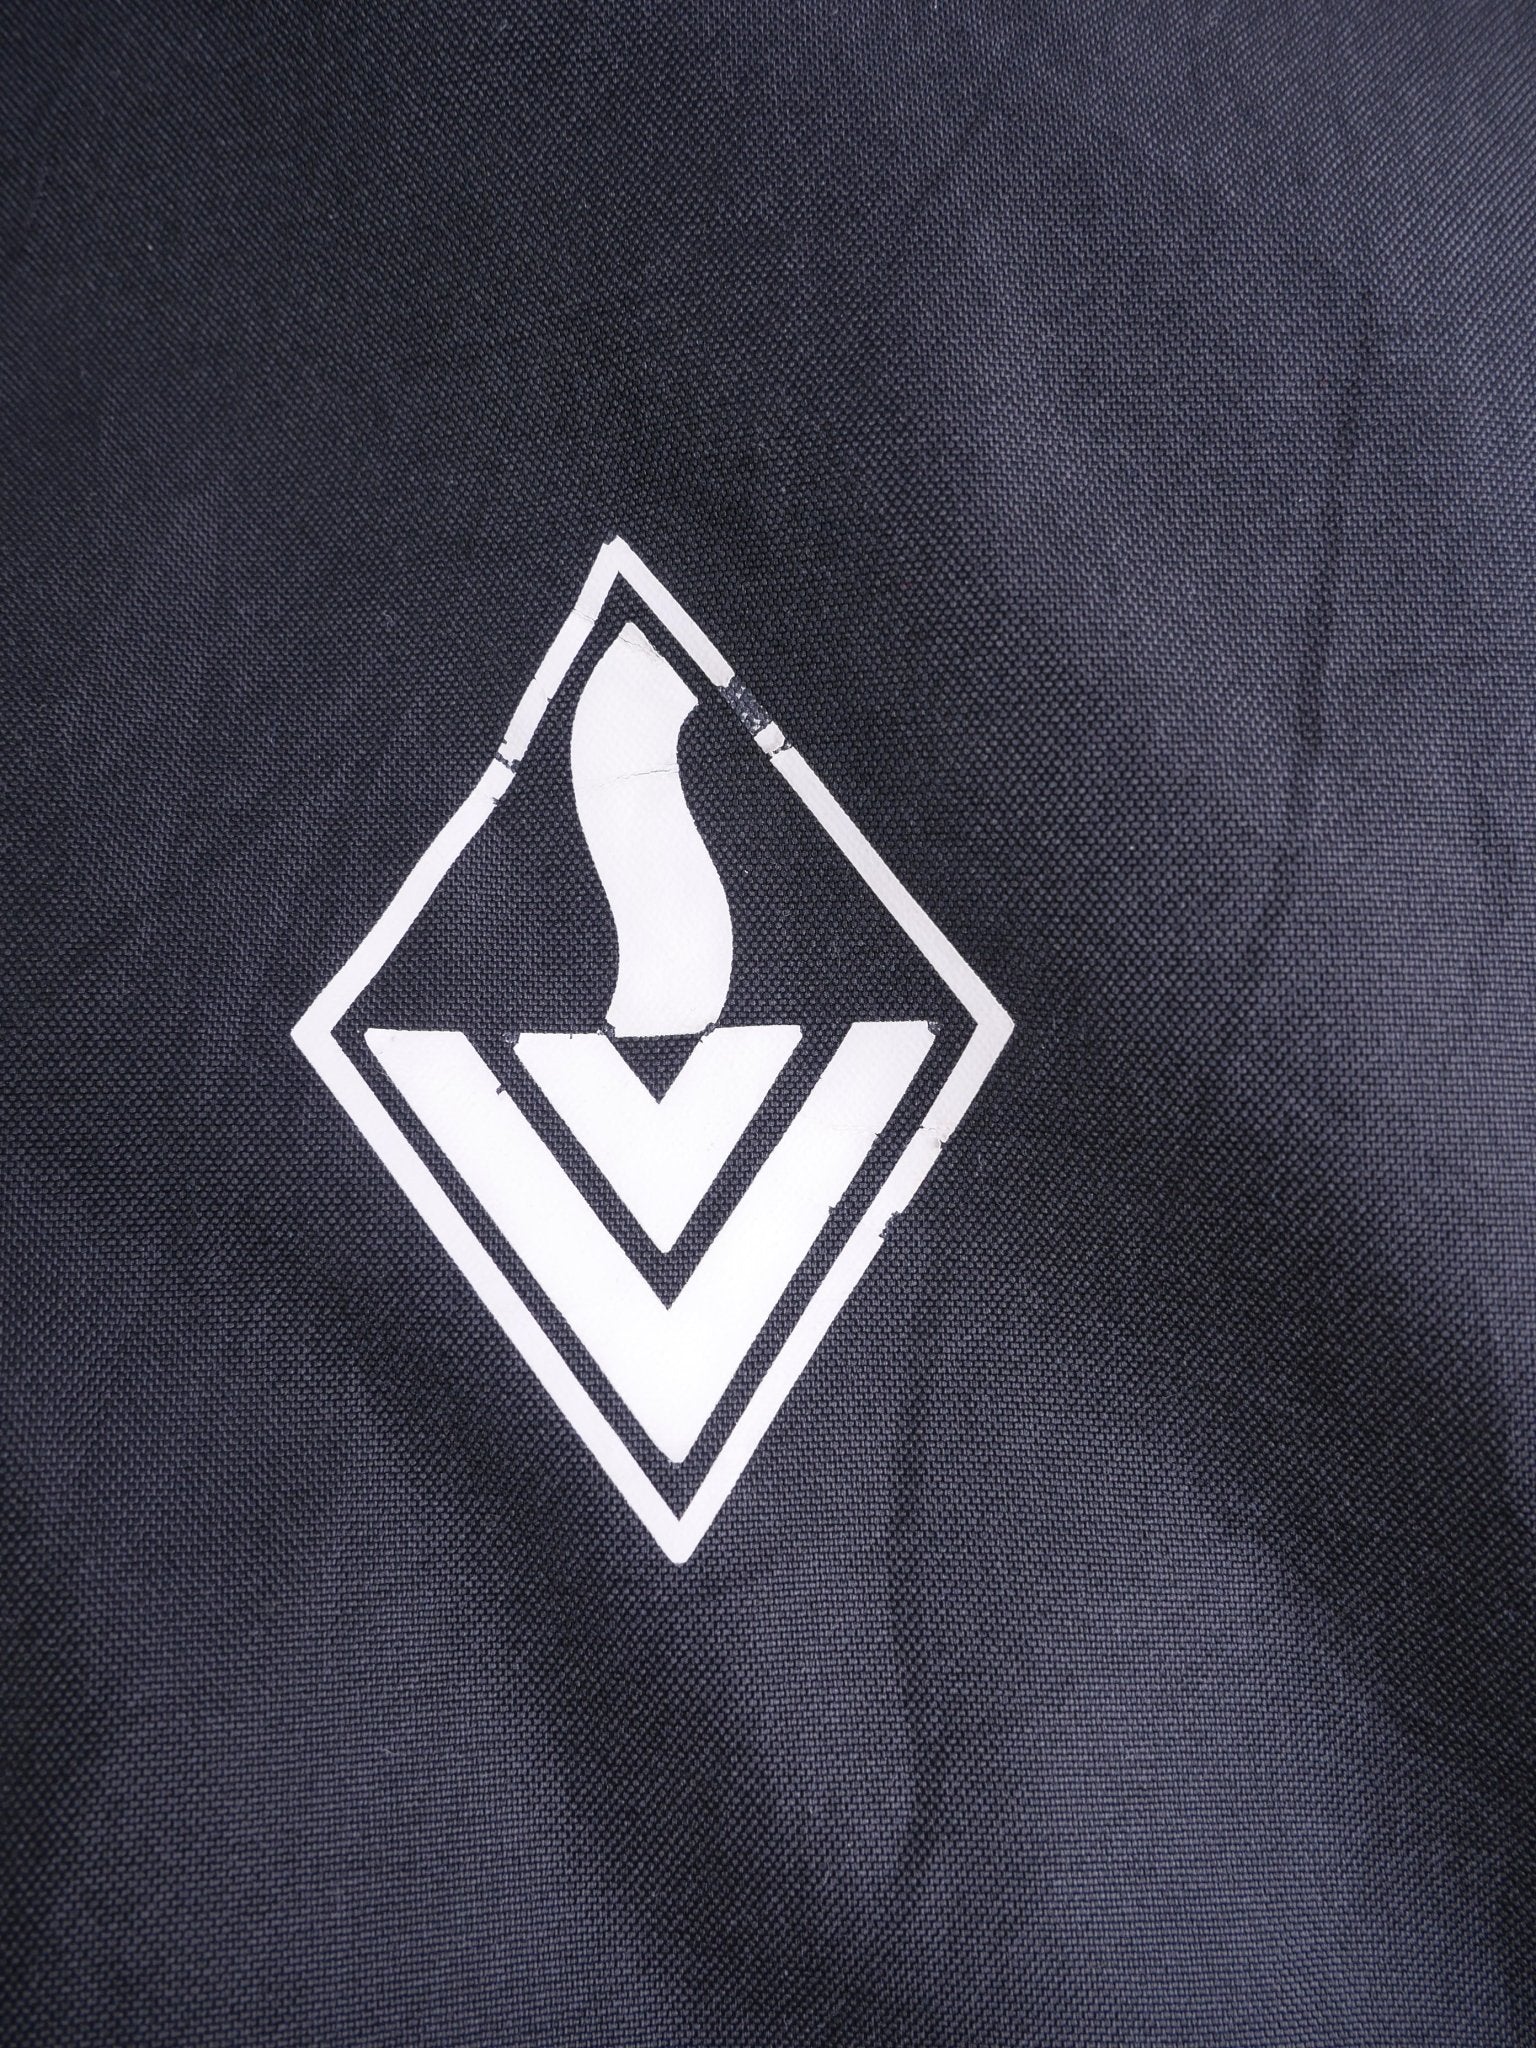 Nike embroidered Logo black Jacke - Peeces